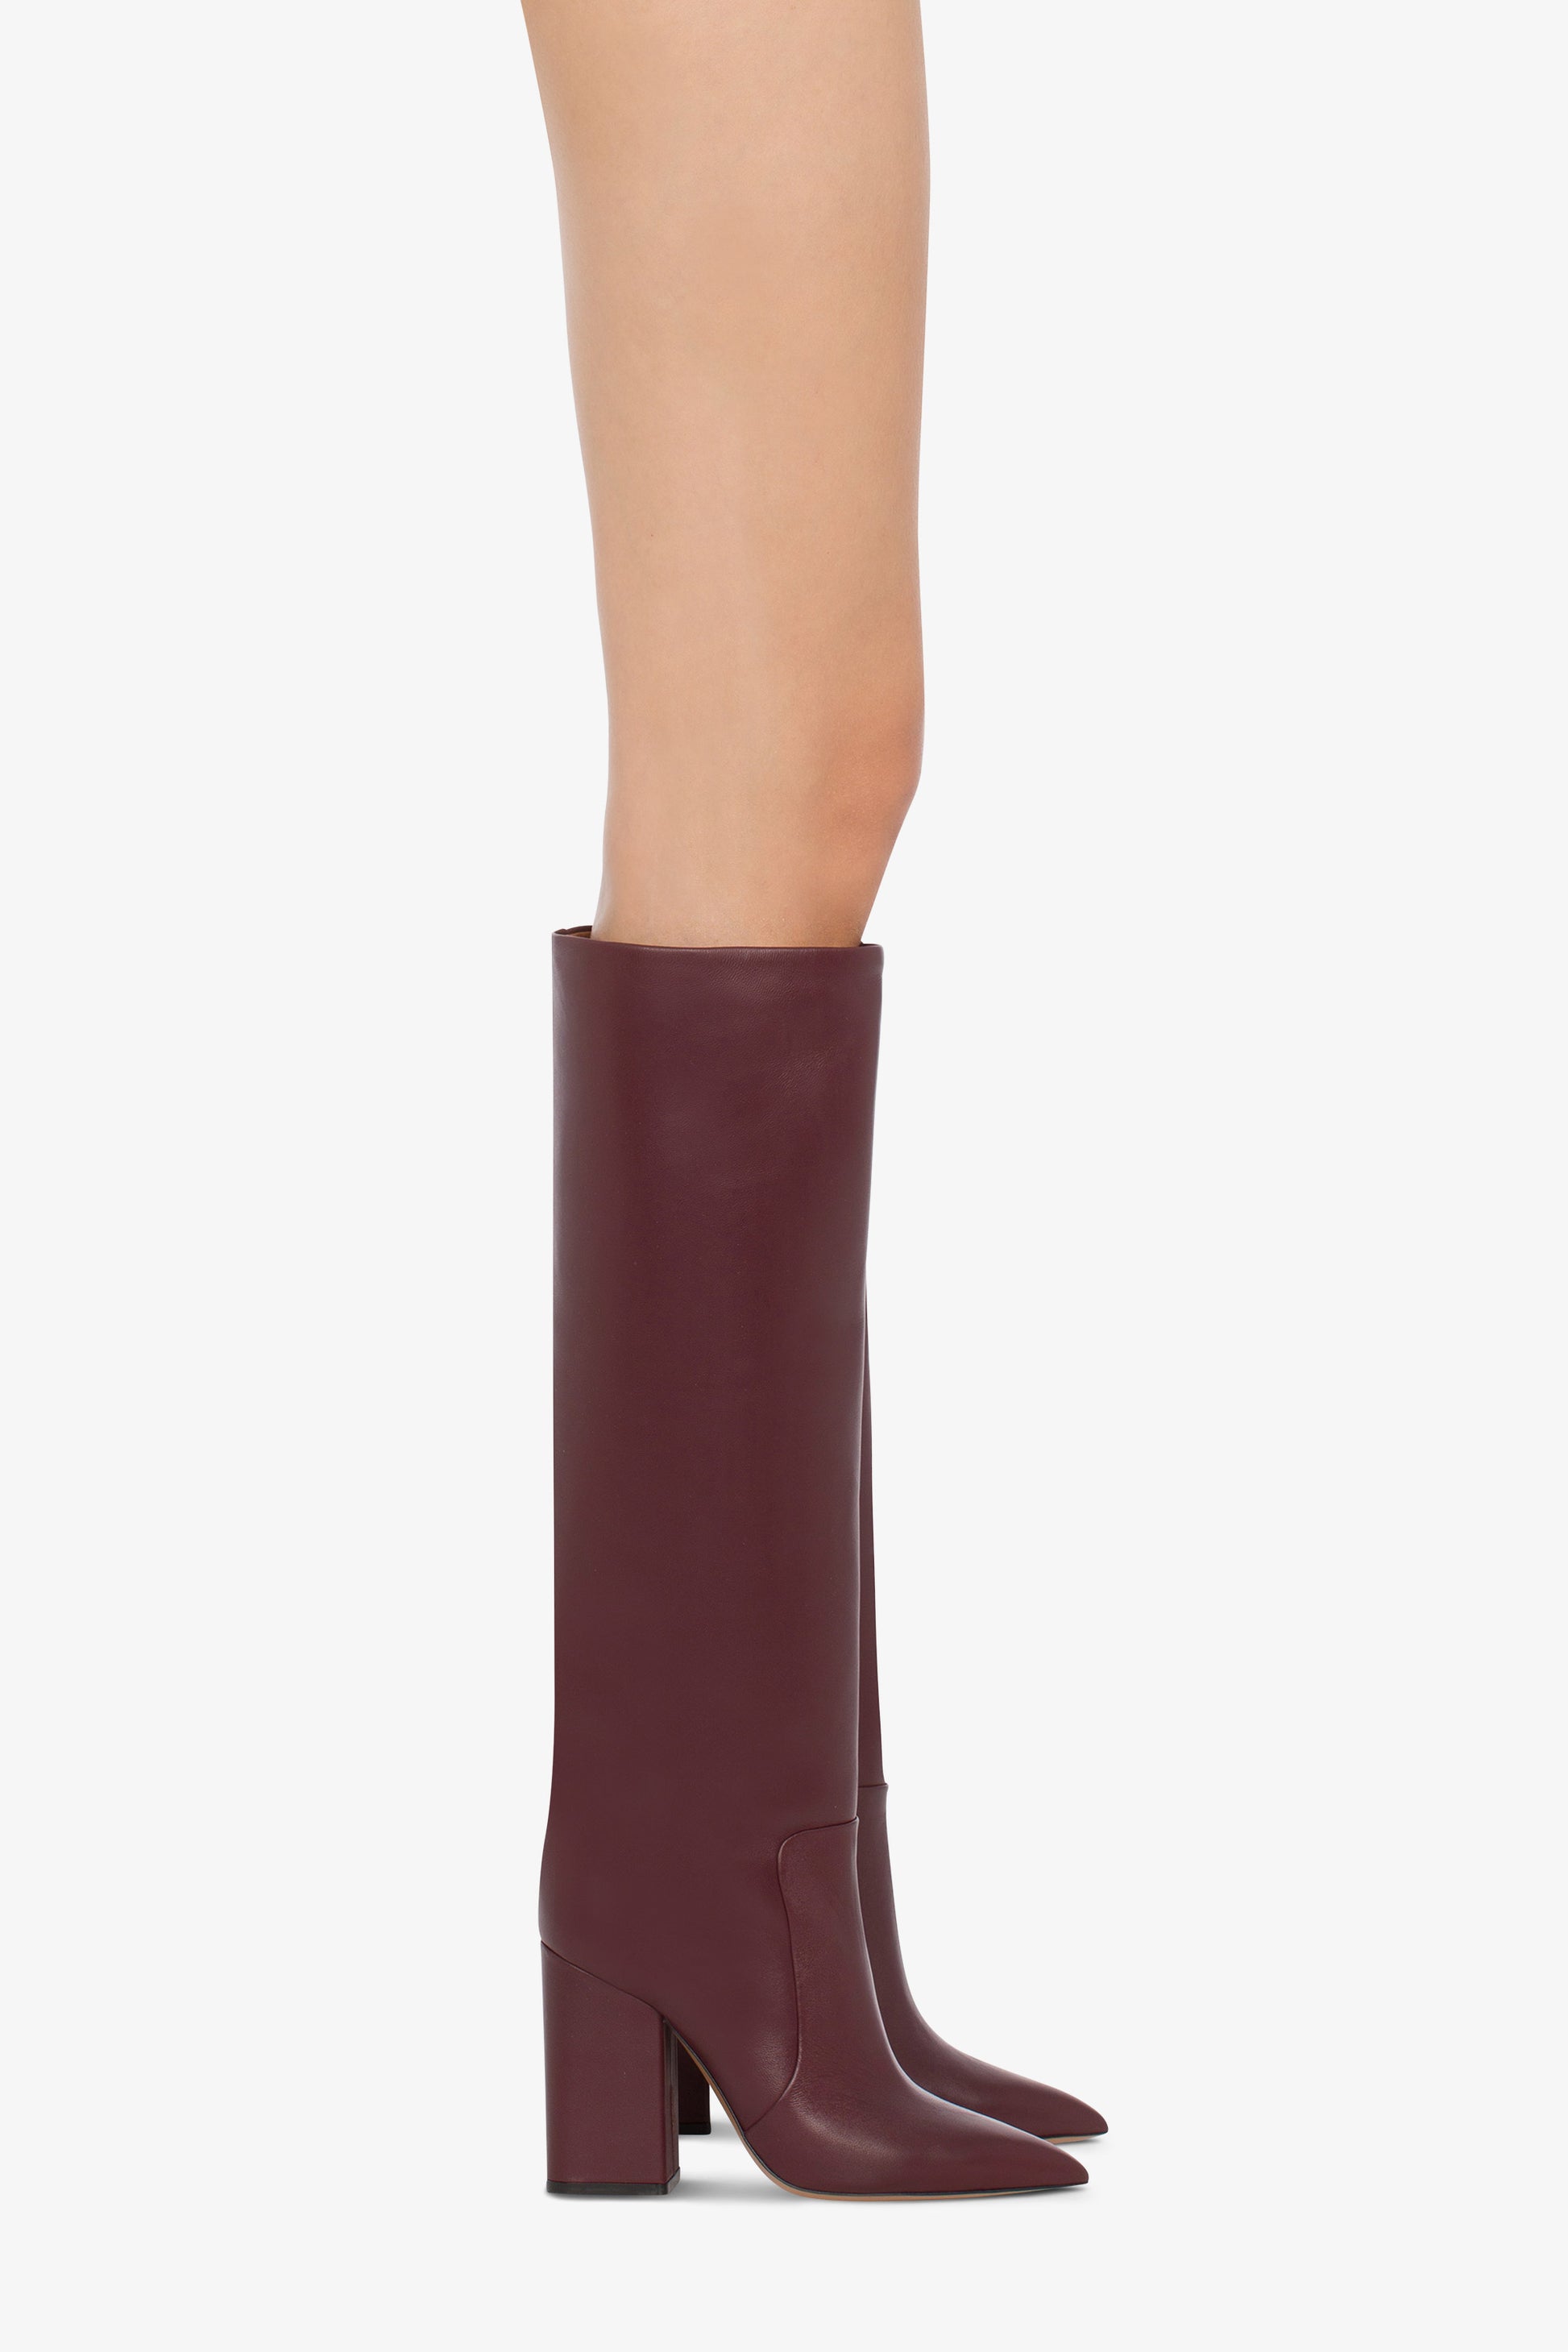 Knee-high boots in smooth burgundy leather - Produkt getragen